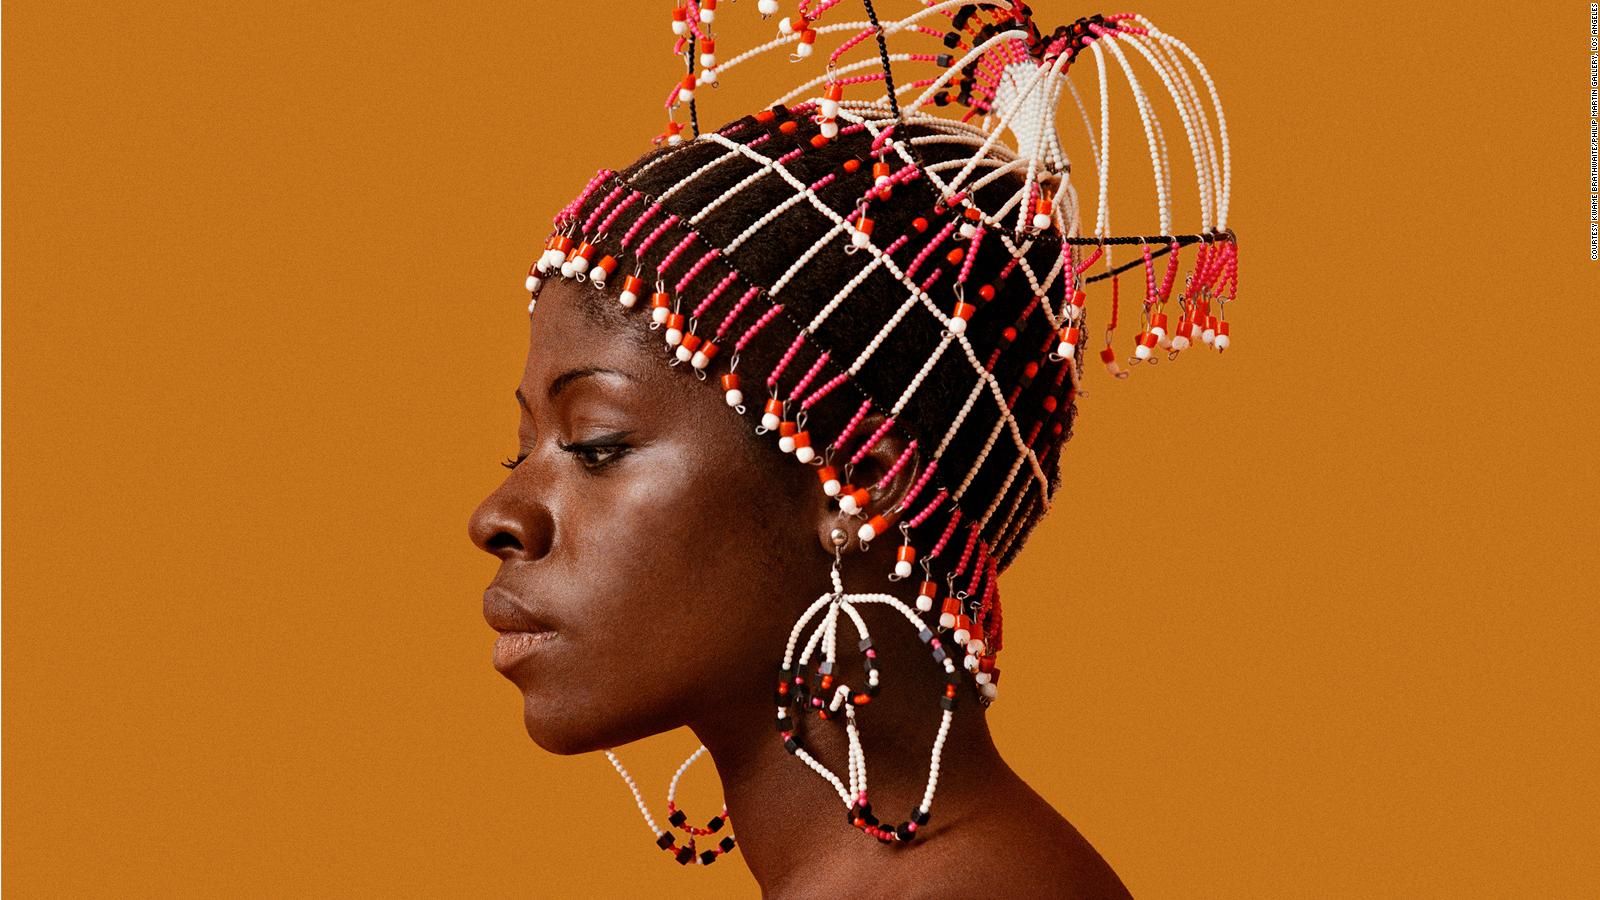 Kwame Brathwaite's photo of the 'Black is Beautiful' movement